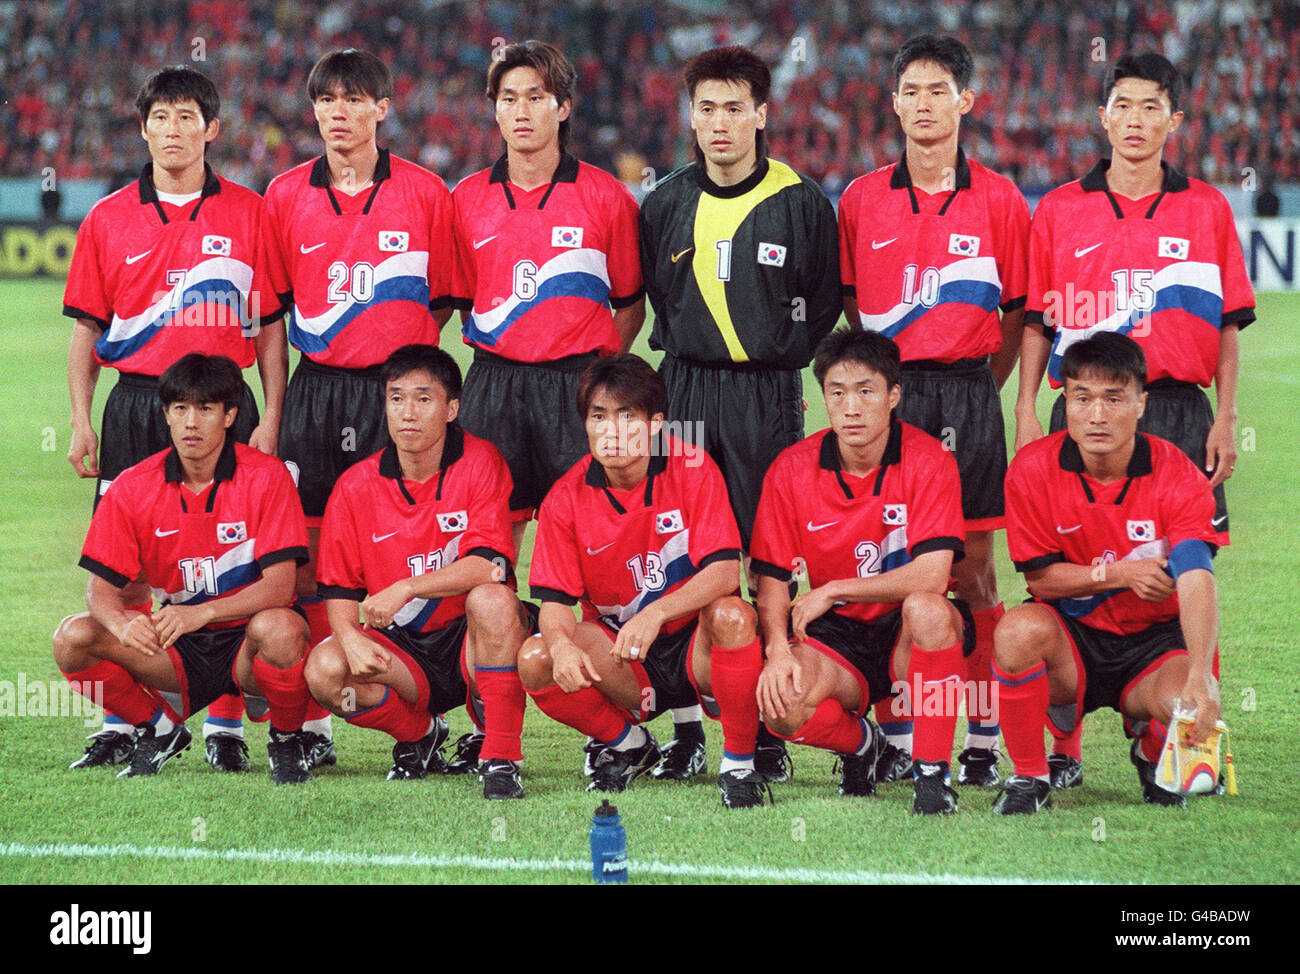 Coupe du monde 1998 photo de l'AFP Corée du Sud (G-D debout) Jung-Woon Ko, Myung-Bo Hong, sang-Chul Yoo, Byung-Ji Kim, Yong-Soo Choi, Sang-Yoon Lee (rangée avant G-R) Jung-Won Seo, Seok-Ju Ha, Tae-Young Kim, Ki-Hyung Lee, Young-il Choi AFP/KIM Jae-Hwan Cor e du Sud (de G D debout) Jung-Woon Ko, Myung-Bo Hong, sang-Chul Yoo, Kim Joi-Soo, Kim Sang-Yoon Lee (de G D accroupis) Jung-won Seo, Seok-Ju Ha, Tae-Young Kim, Ki-Hyung Lee, Young-il Choi AFP/KIM Jae-Hwan Banque D'Images